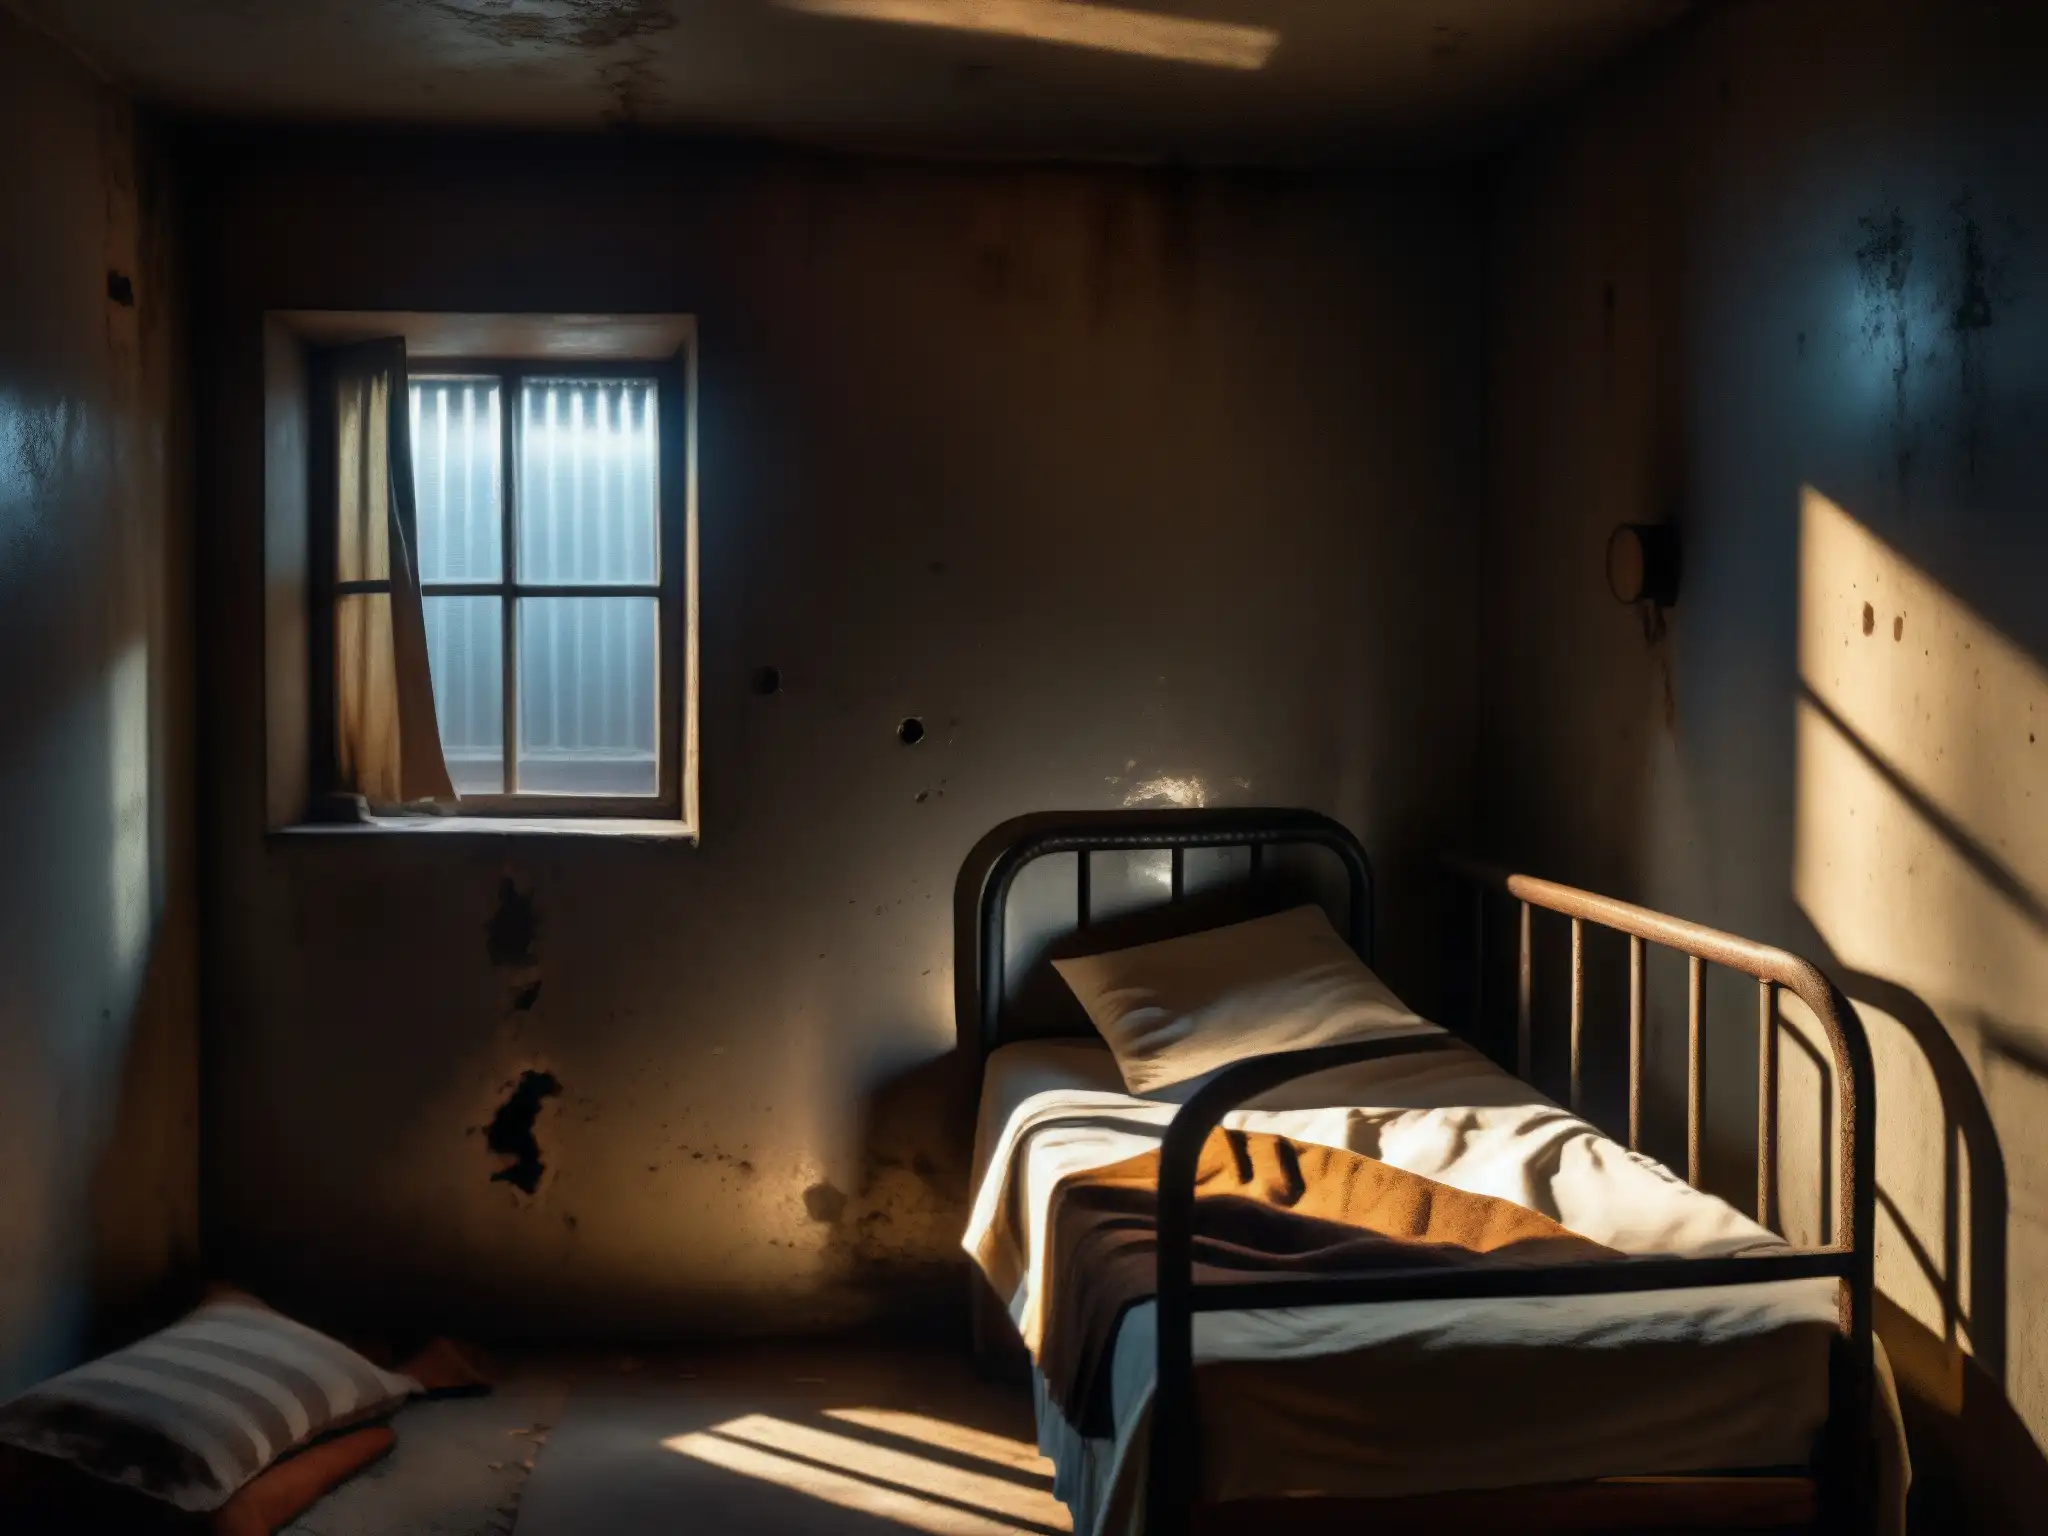 Prisión celular en penumbra con celdas descascaradas, ventana con barrotes y cama oxidada, evocando mitos y leyendas urbanas